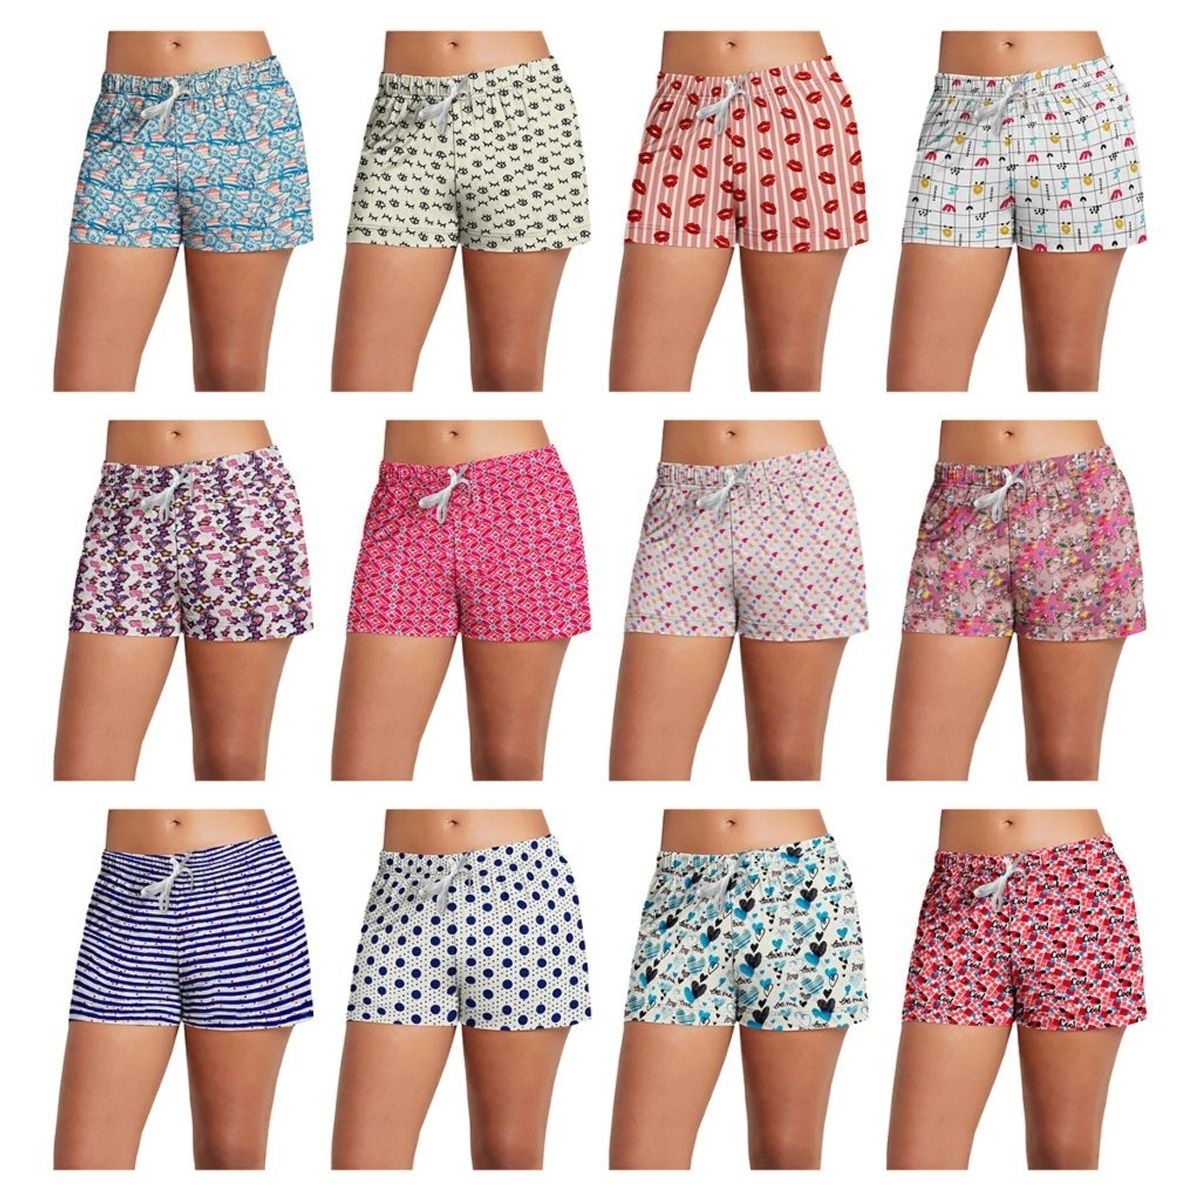 5-Pack: Women's Super-Soft Lightweight Fun Printed Comfy Lounge Bottom Pajama Shorts W/ Drawstring - X-large, Love